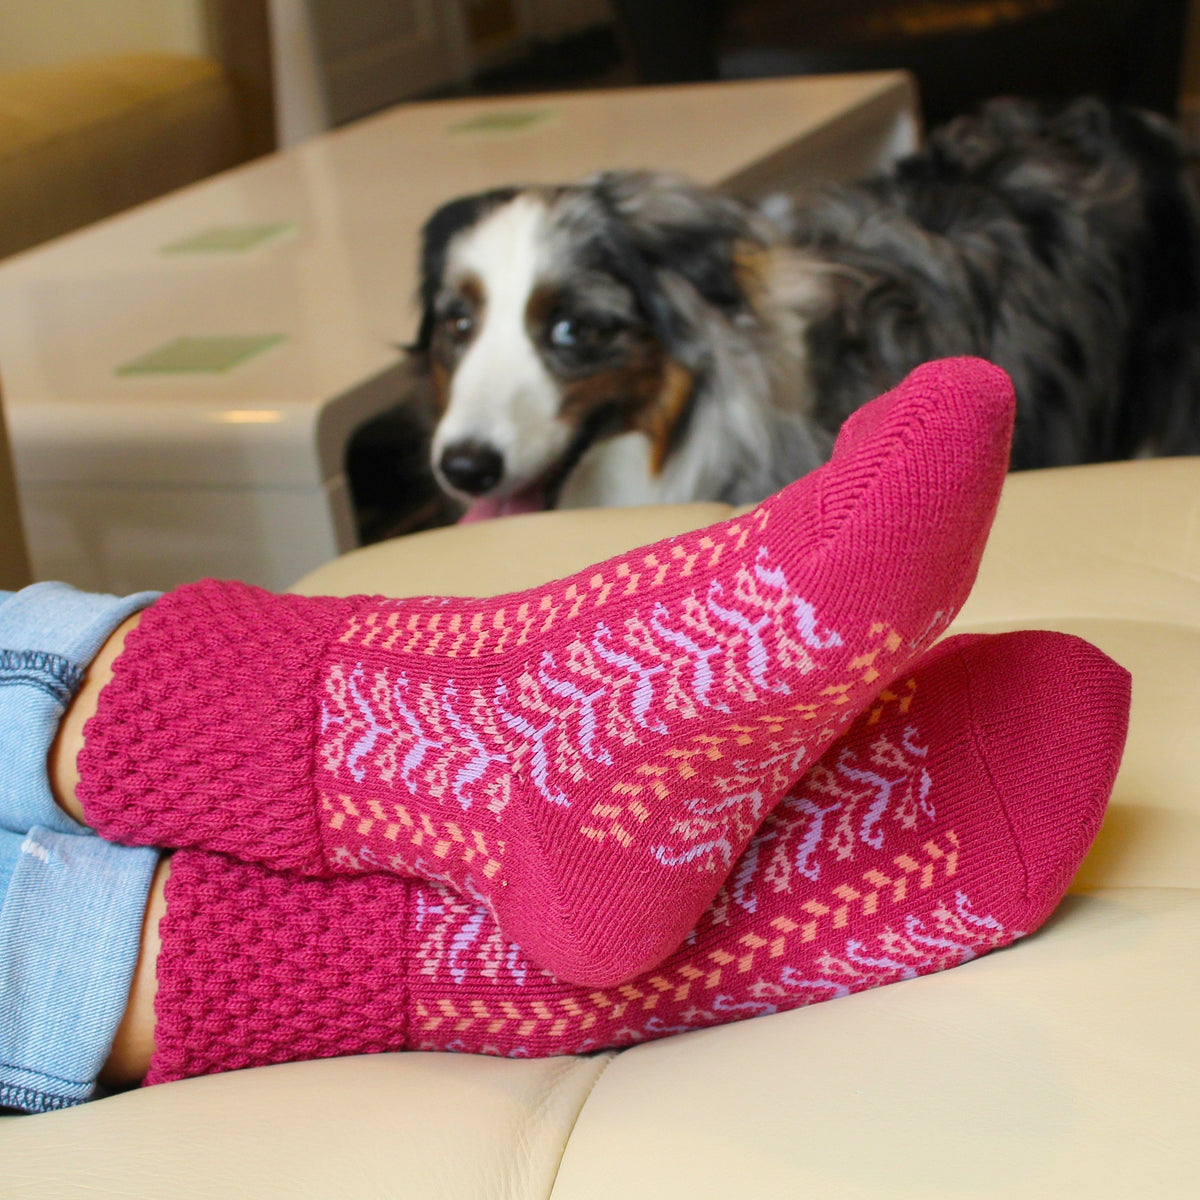 Wool Blend Plush Warm Boot Socks NO GRIPS | Herringbone |  Raspberry - CHERRYSTONE by MARKET TO JAPAN LLC